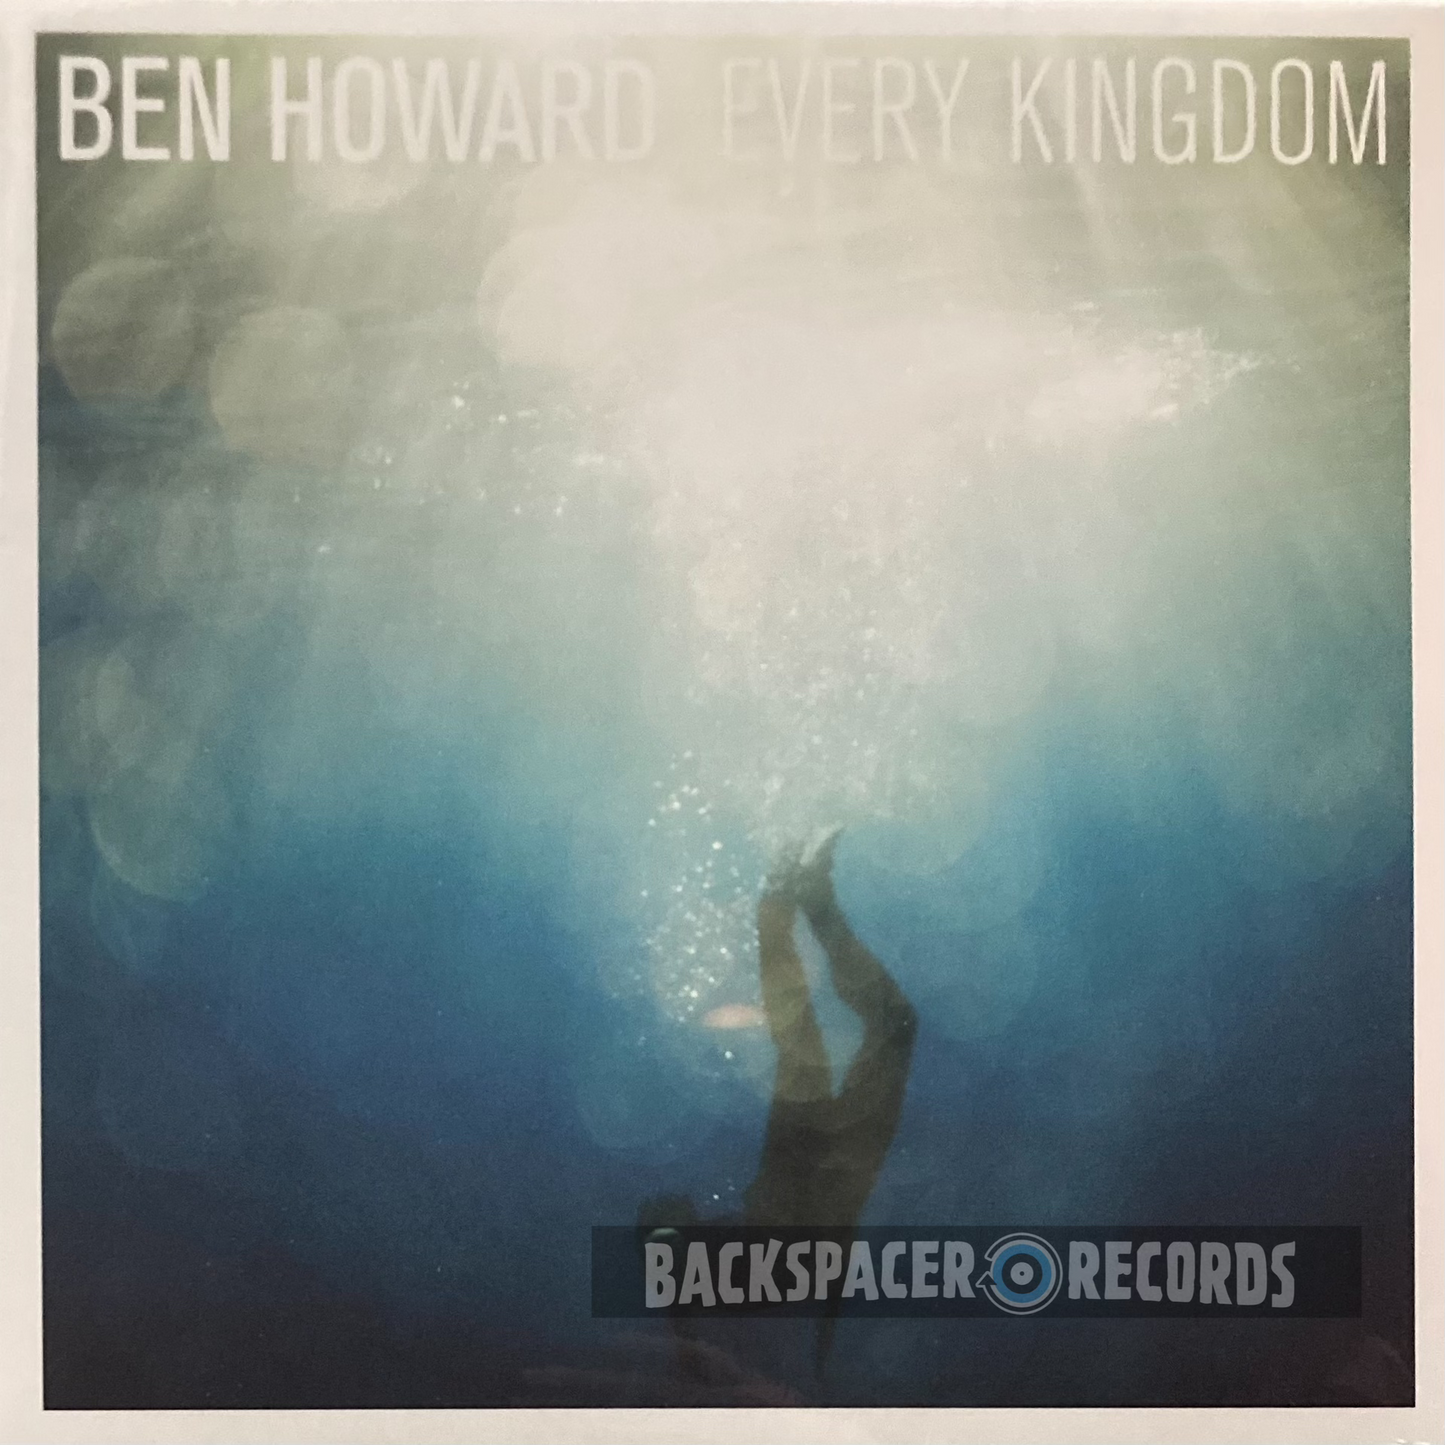 Ben Howard - Every Kingdom LP (Sealed)